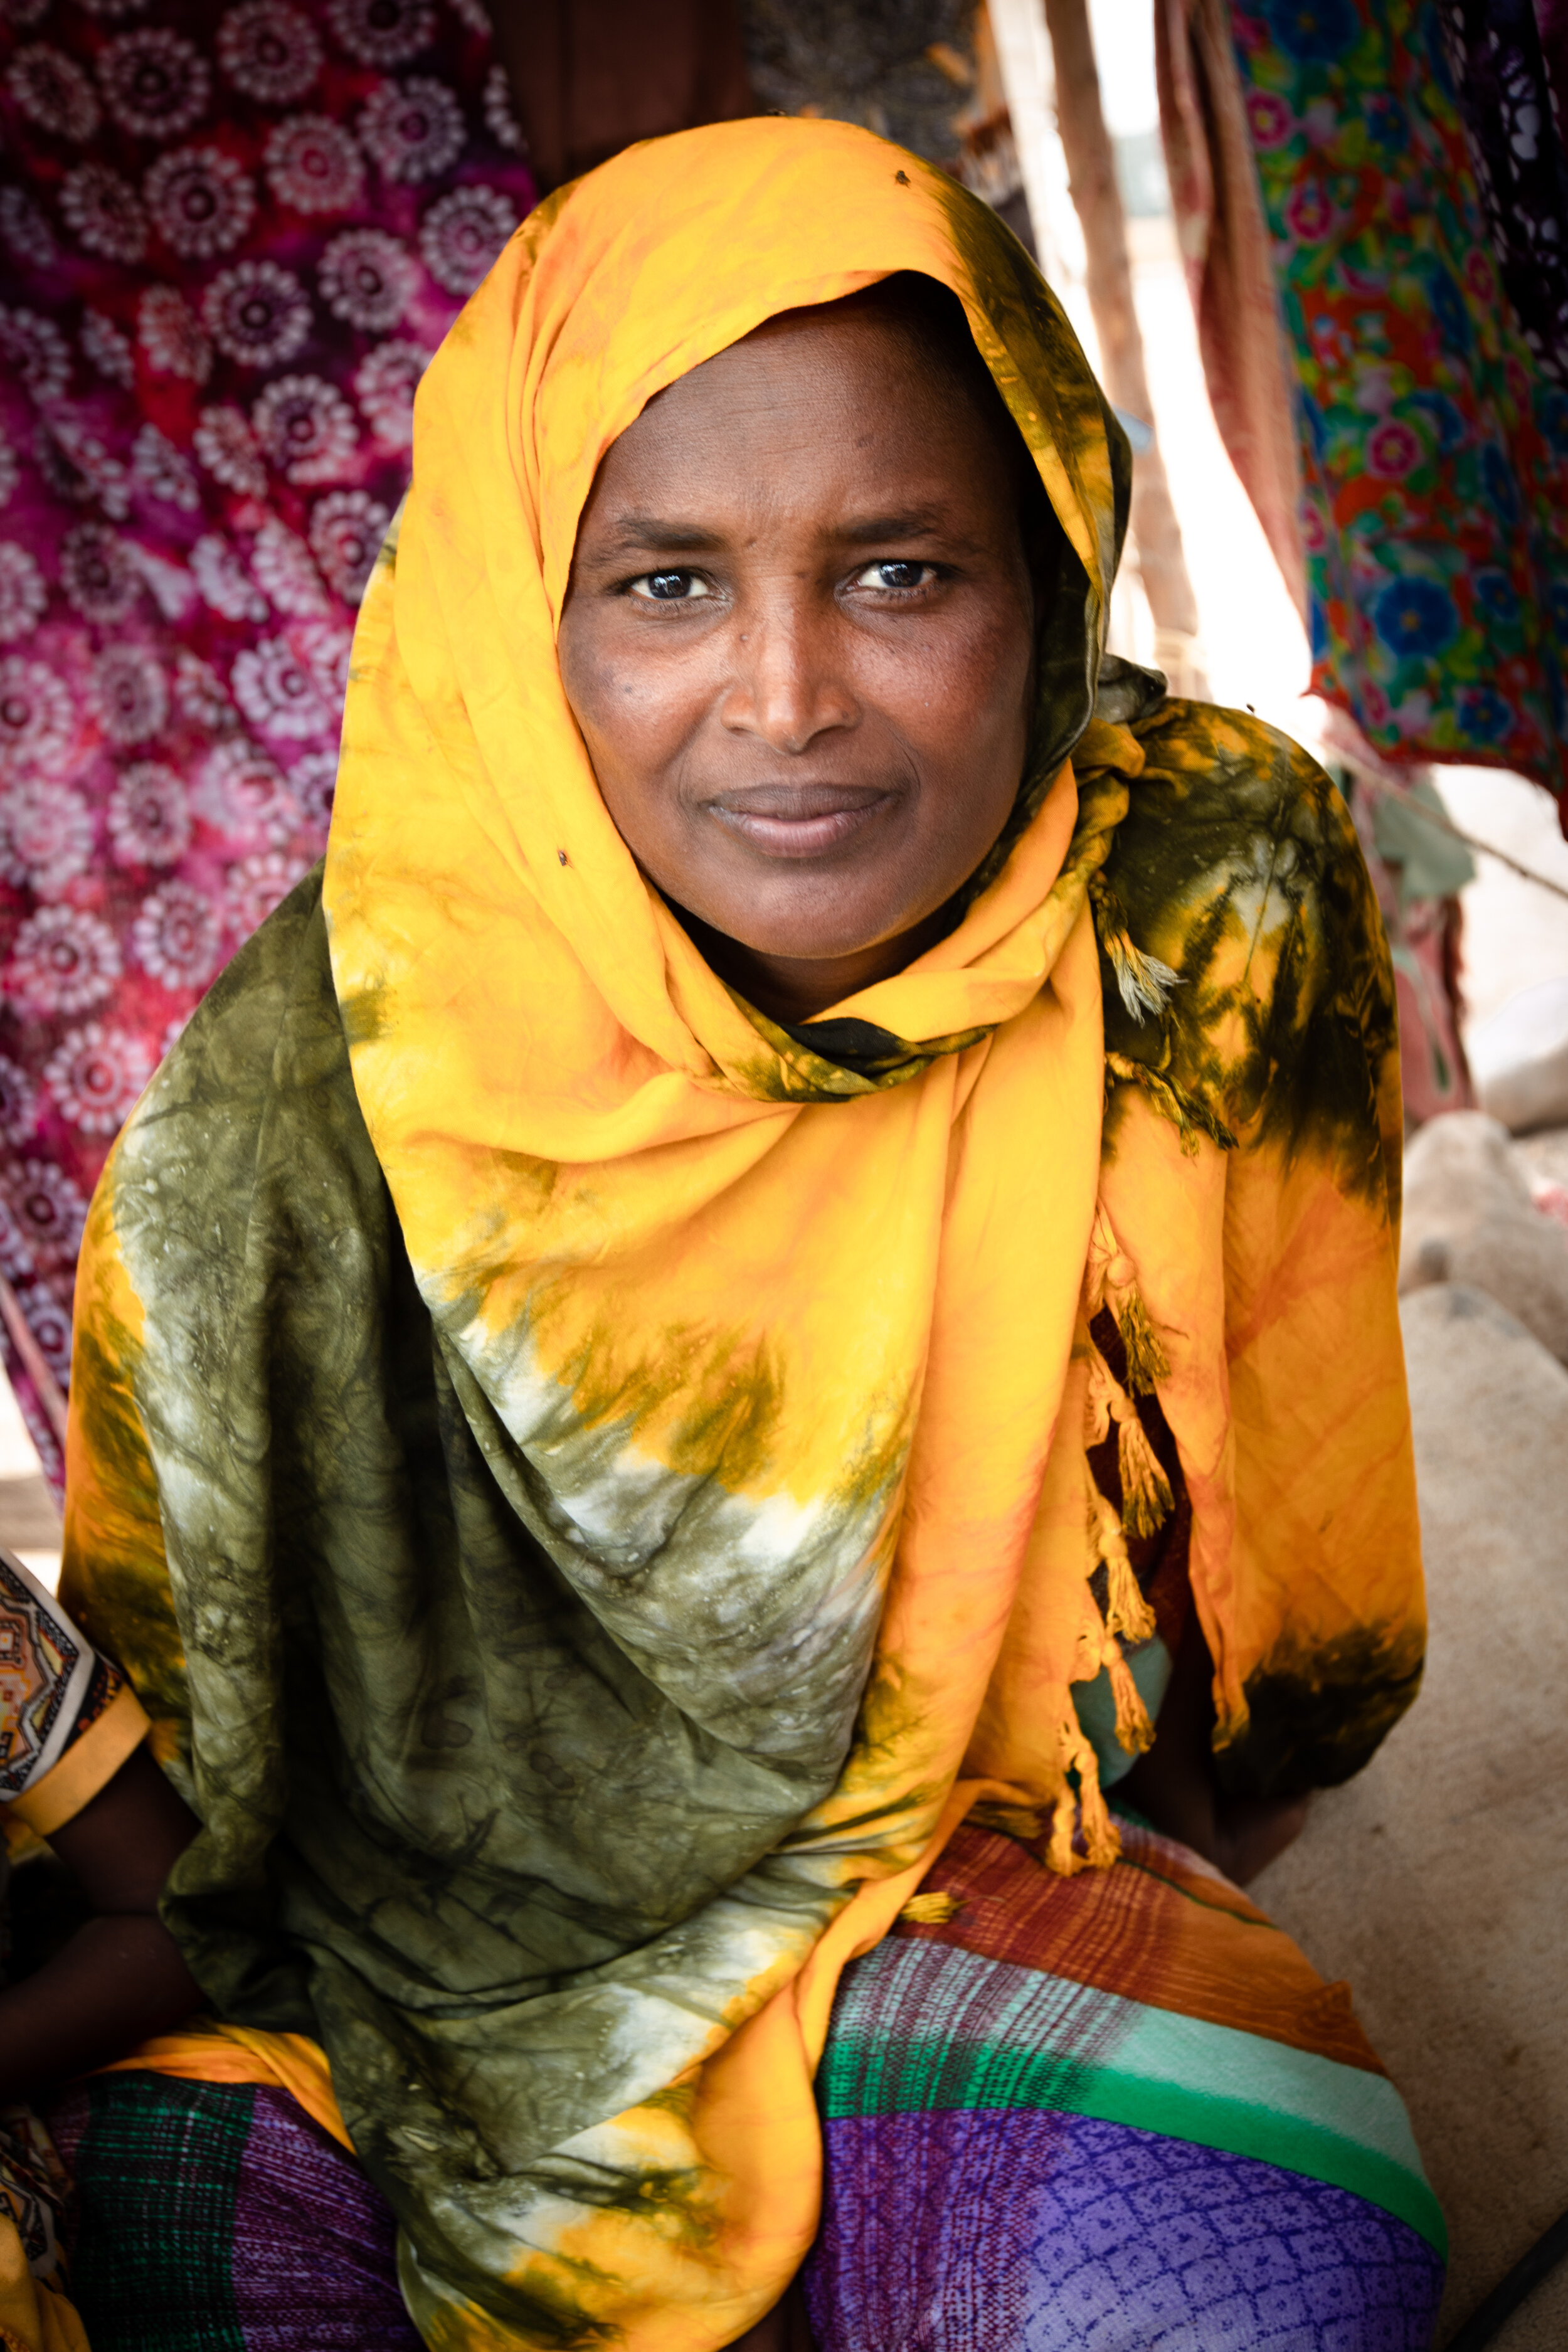  textile street shop owner in Damerjog IDP camp in Djibouti. 2019 